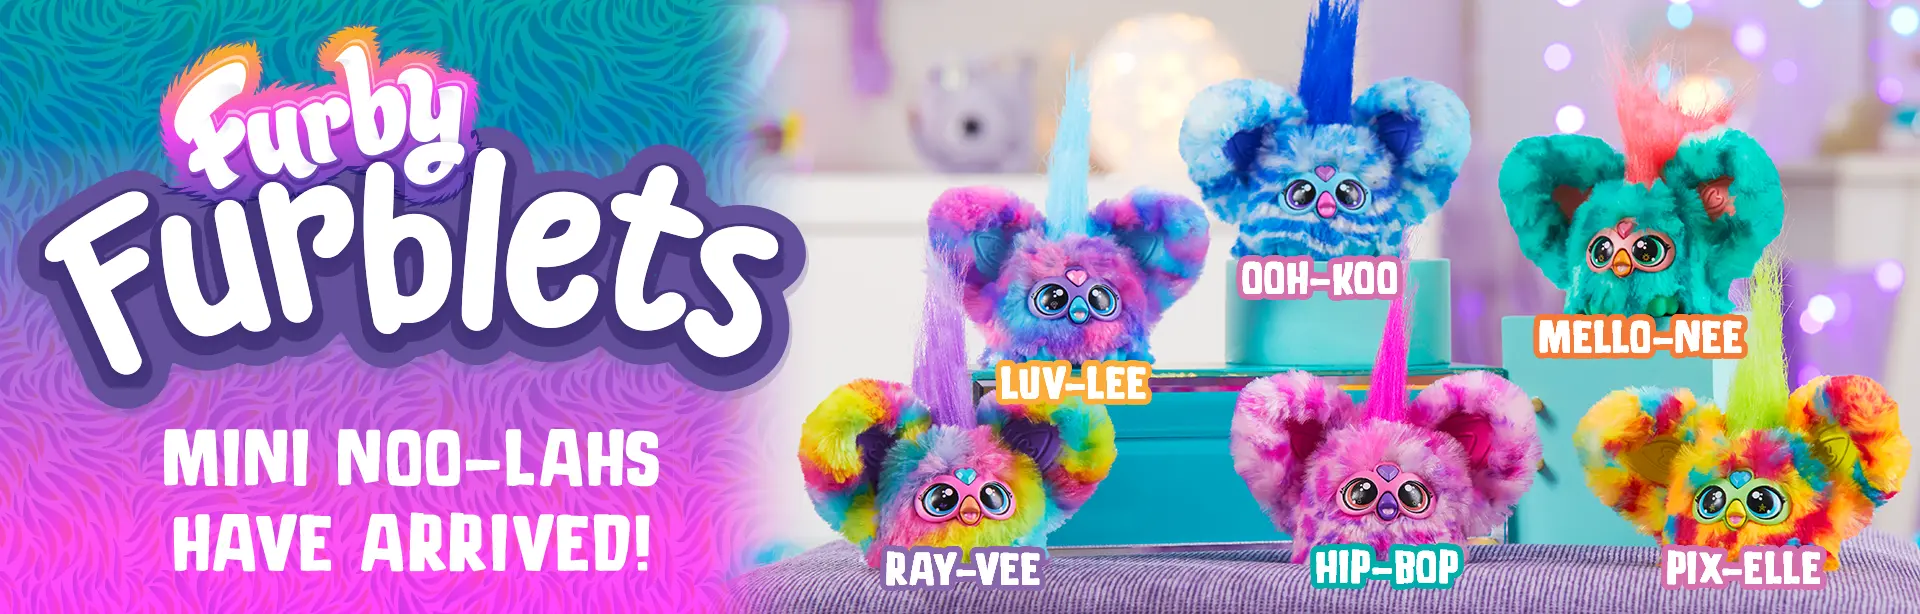 Furby Furblets Mini Noo-Lahs Banner